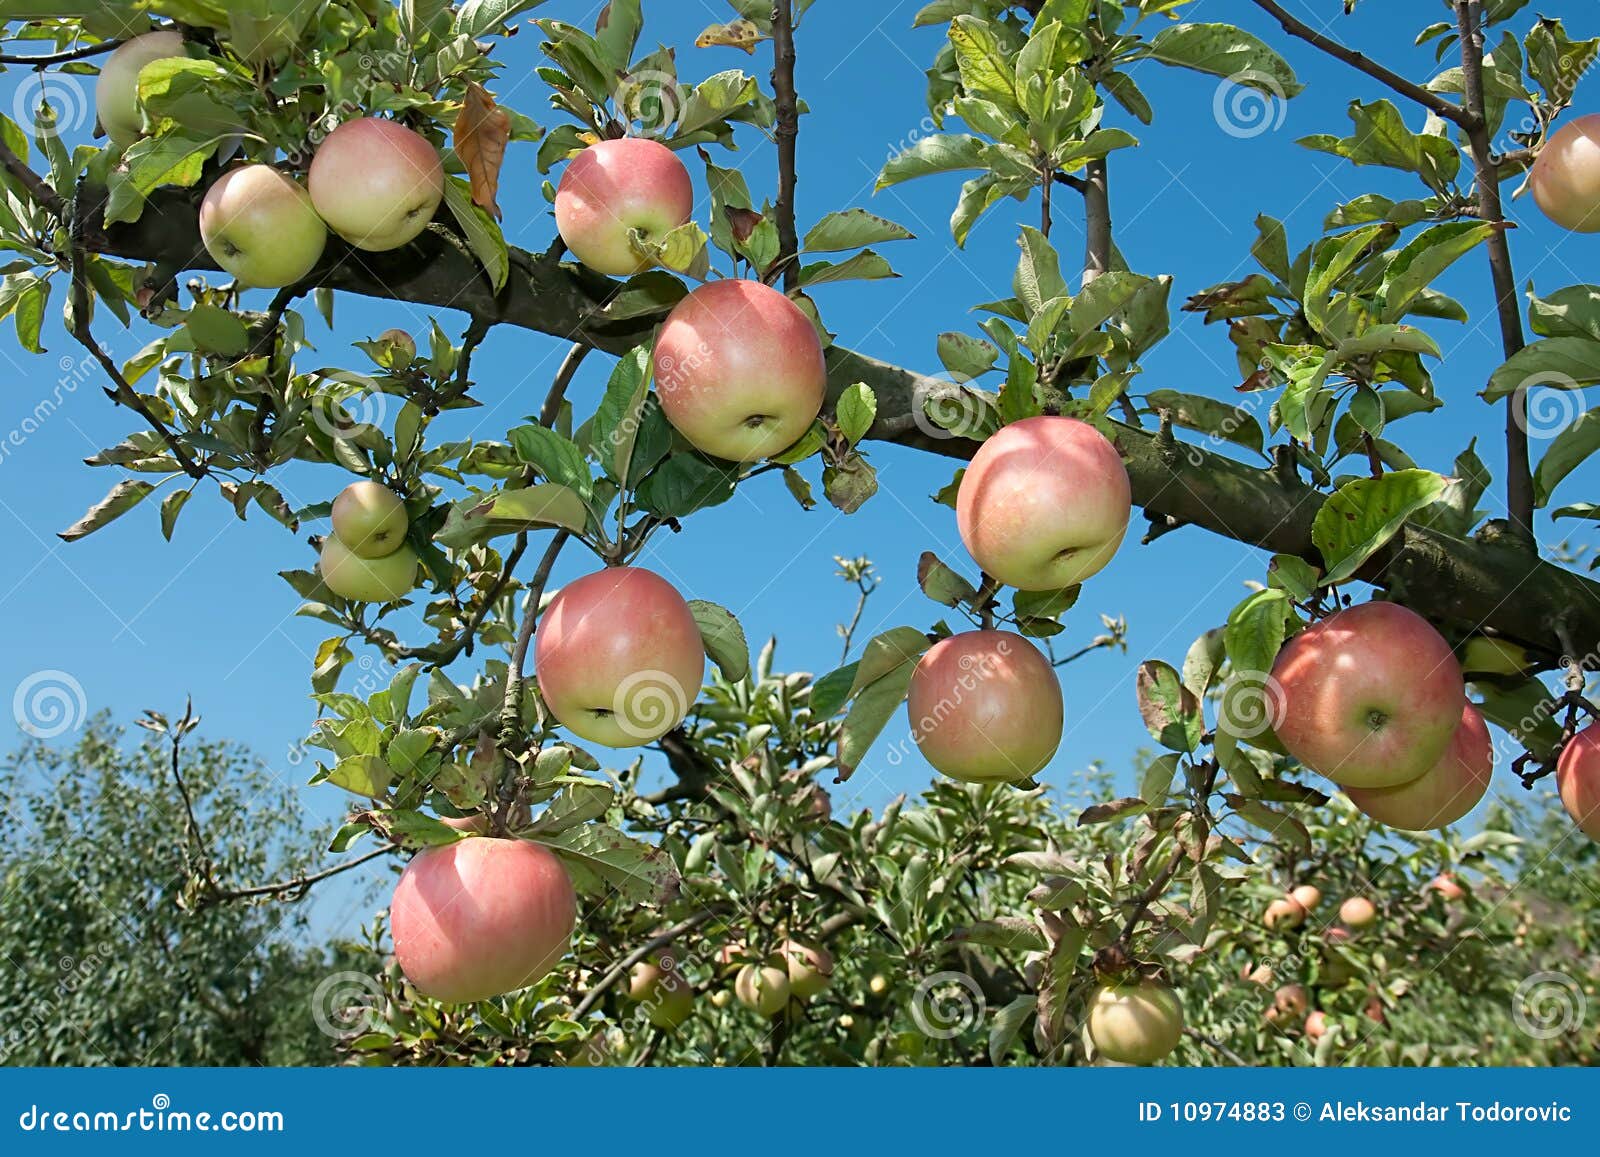 fresh ripen apples on branch tree